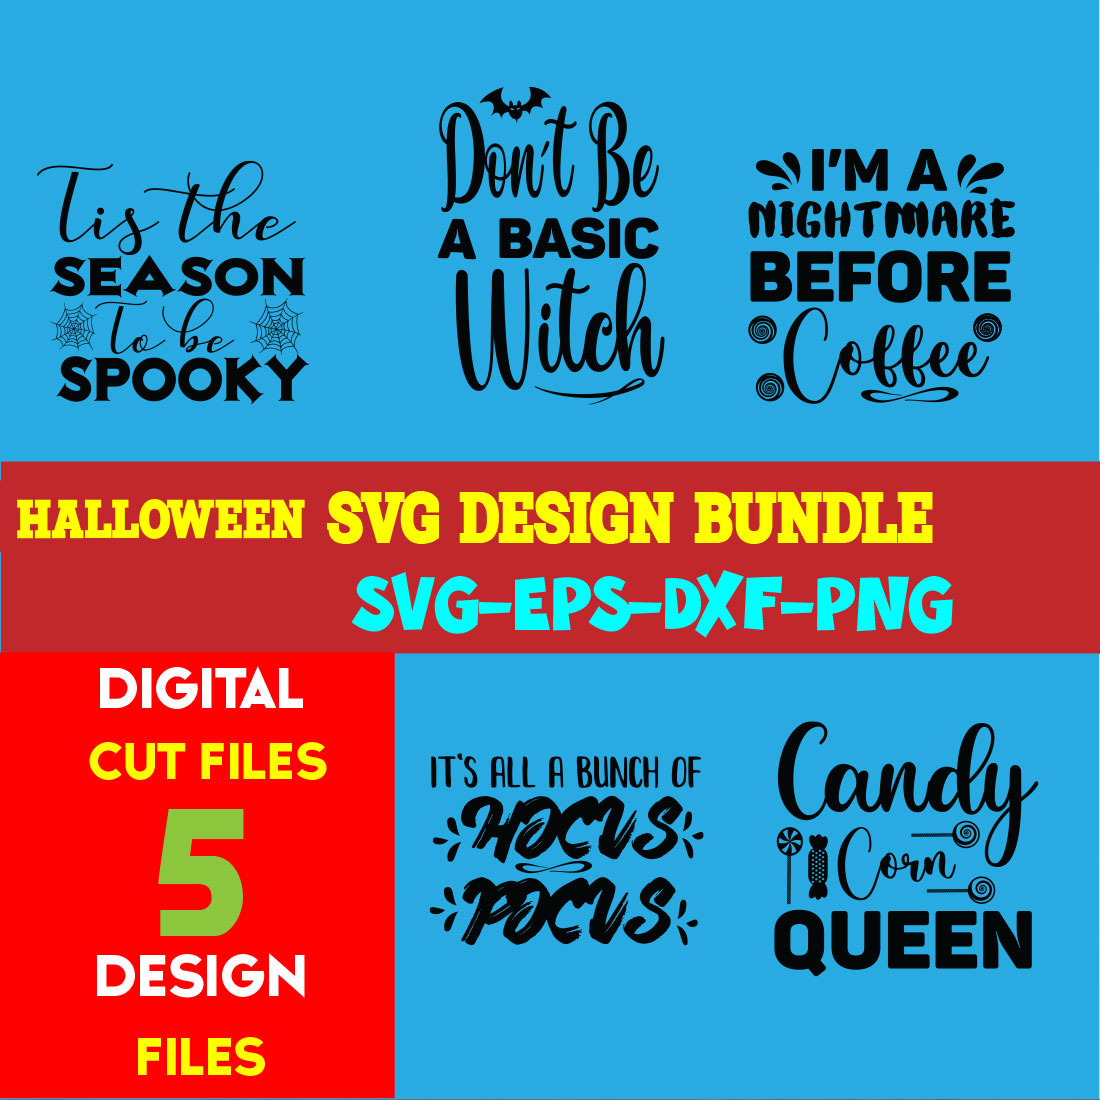 Halloween T-shirt Design Bundle Volume-01 cover image.